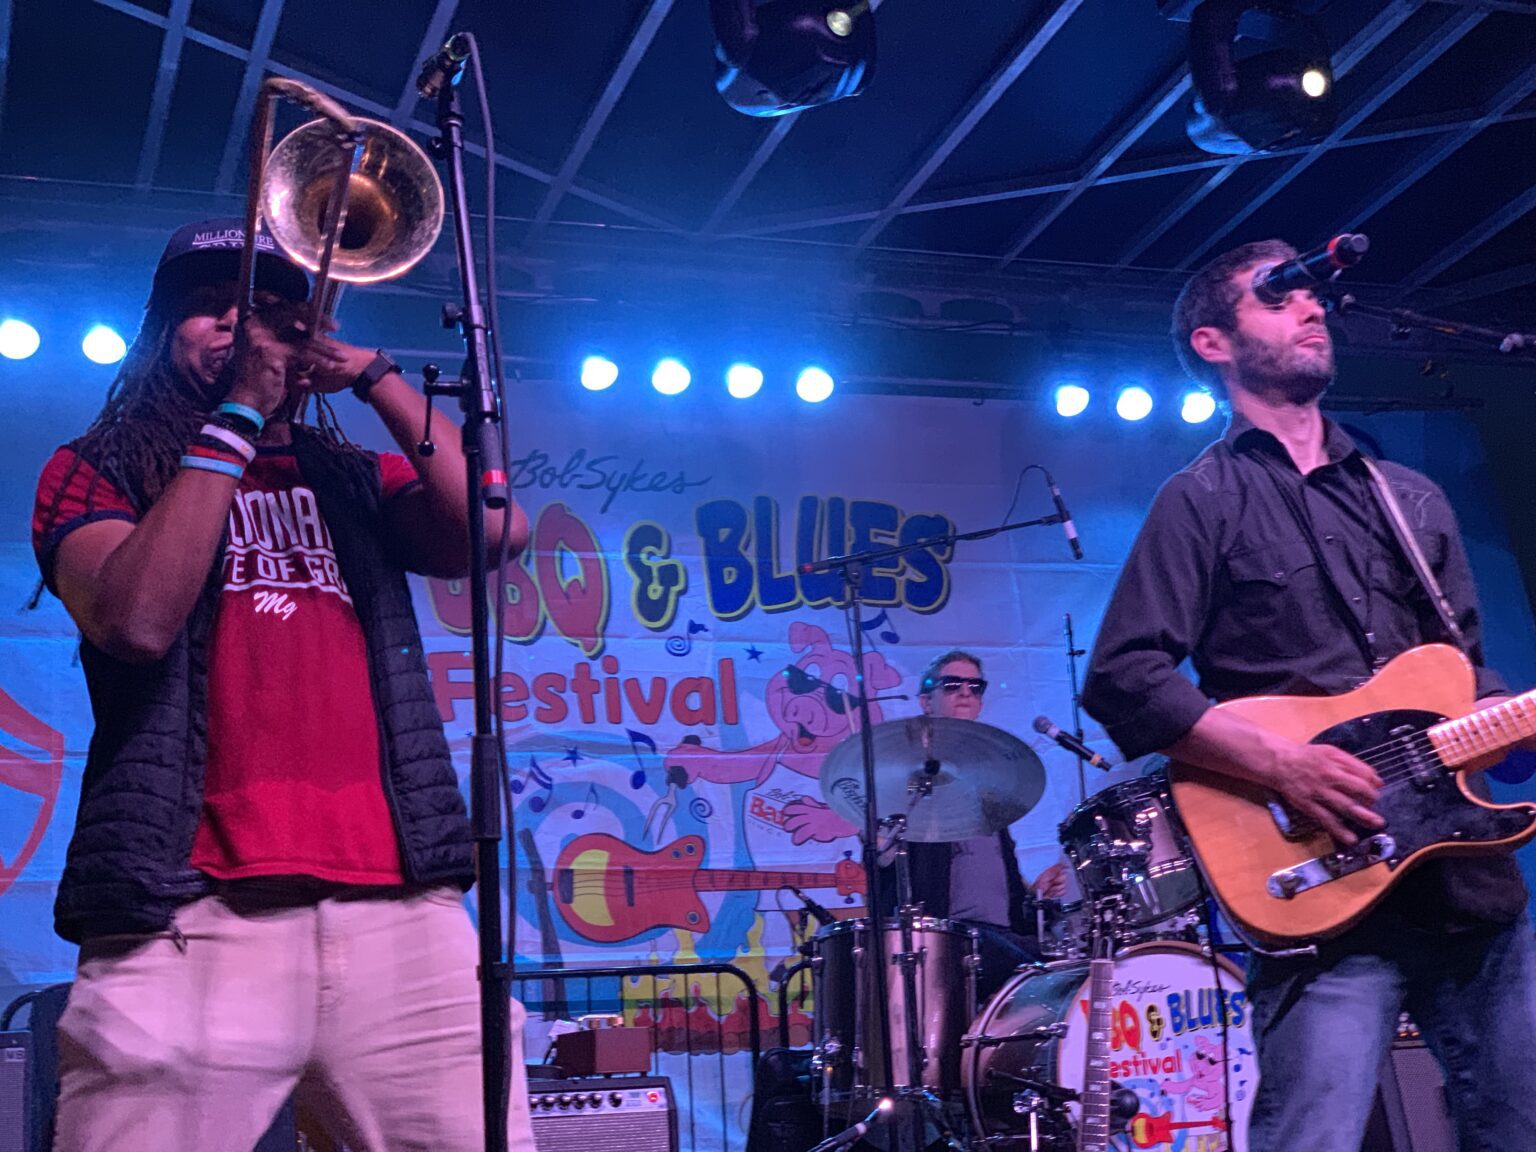 Bob Sykes Bbq & Blues Festival in Bessemer, AL